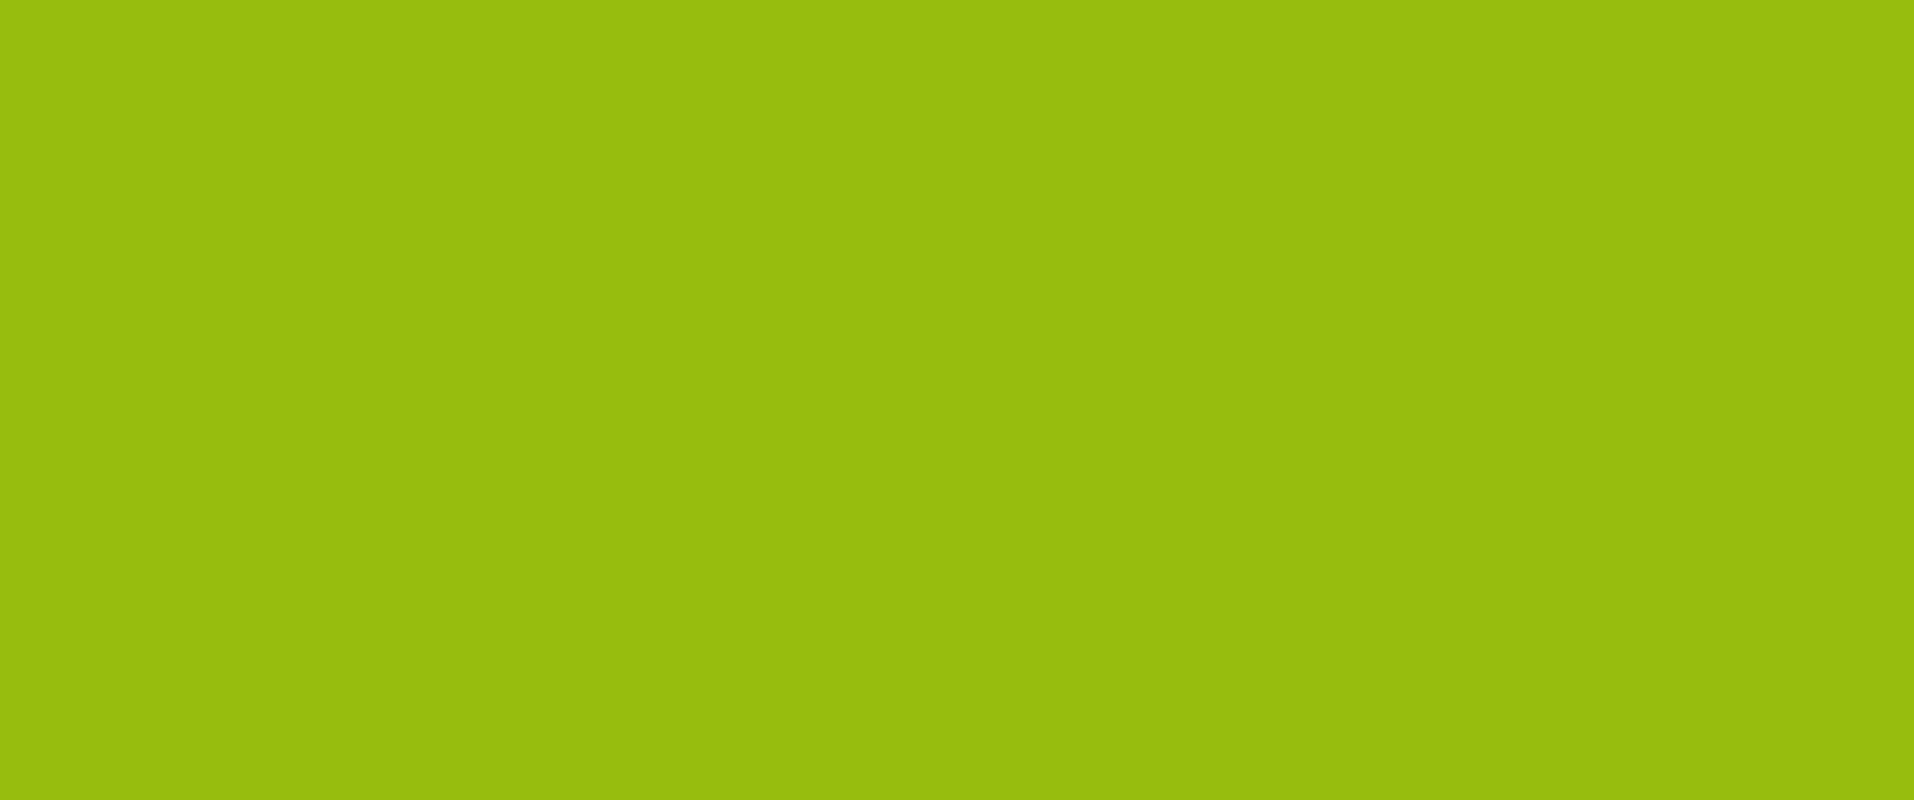 Marabu Batikverf Easy Color 25 g, mei groen